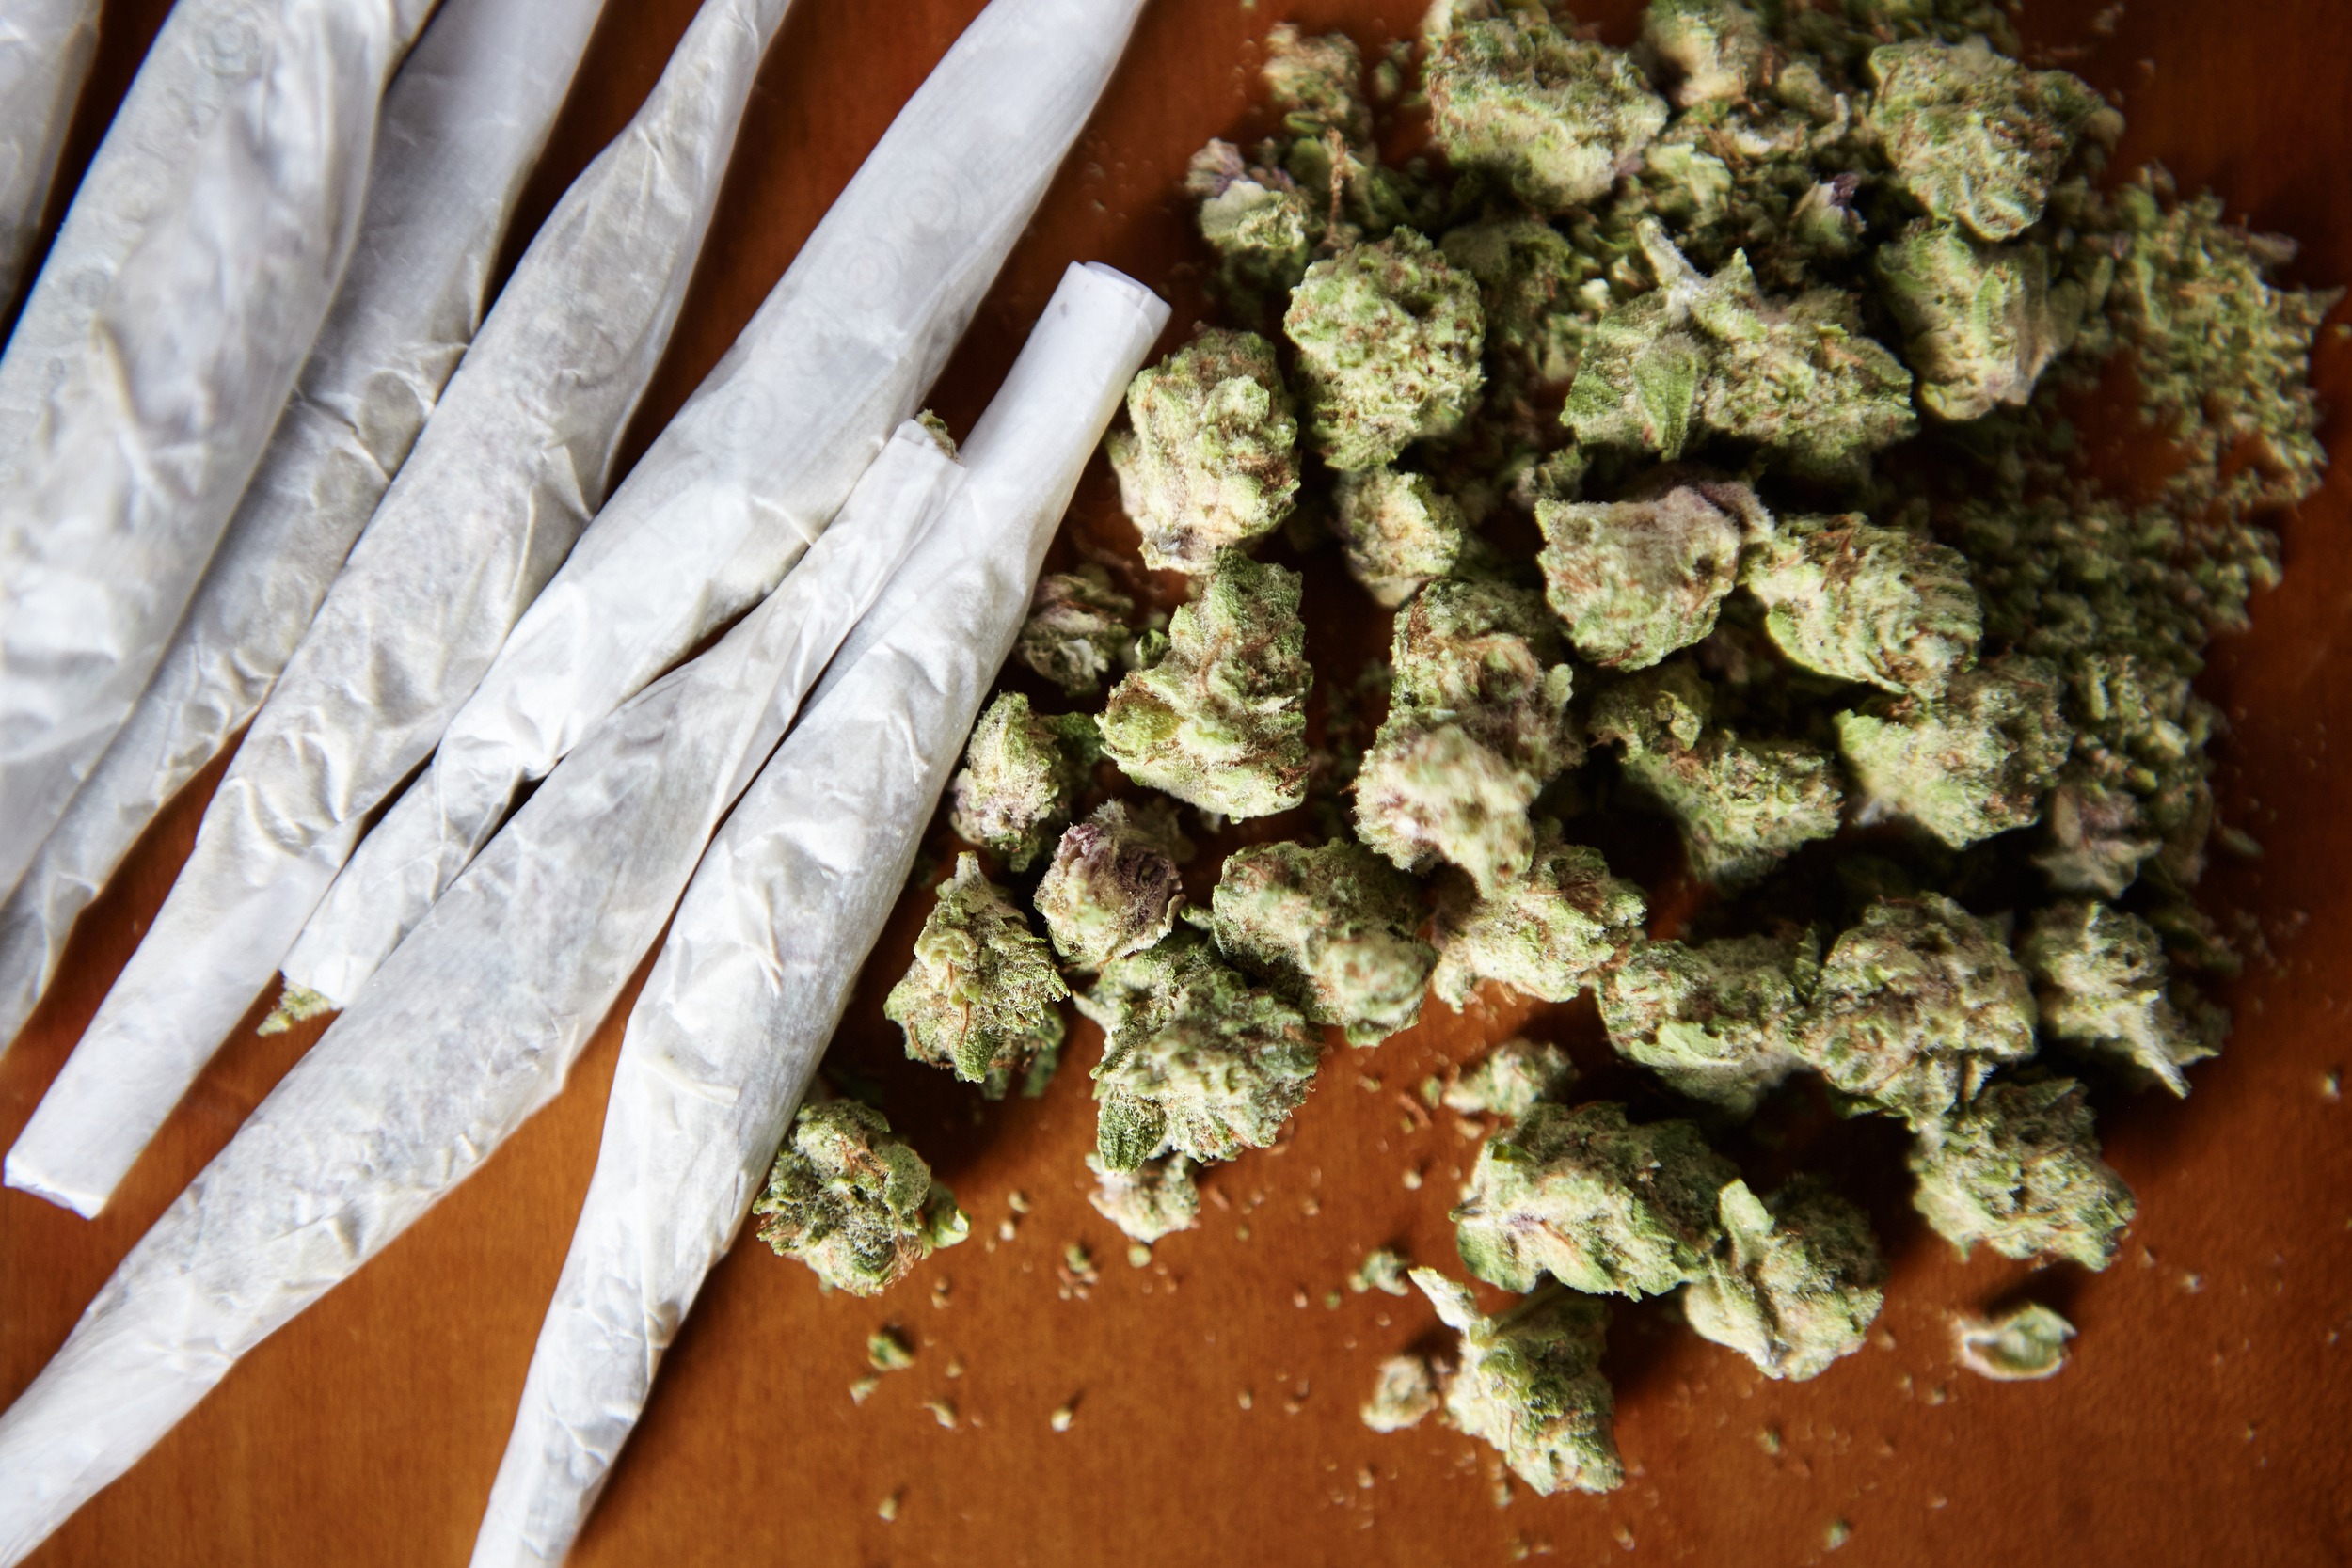 thc-and-cbd-marijuana-with-joints